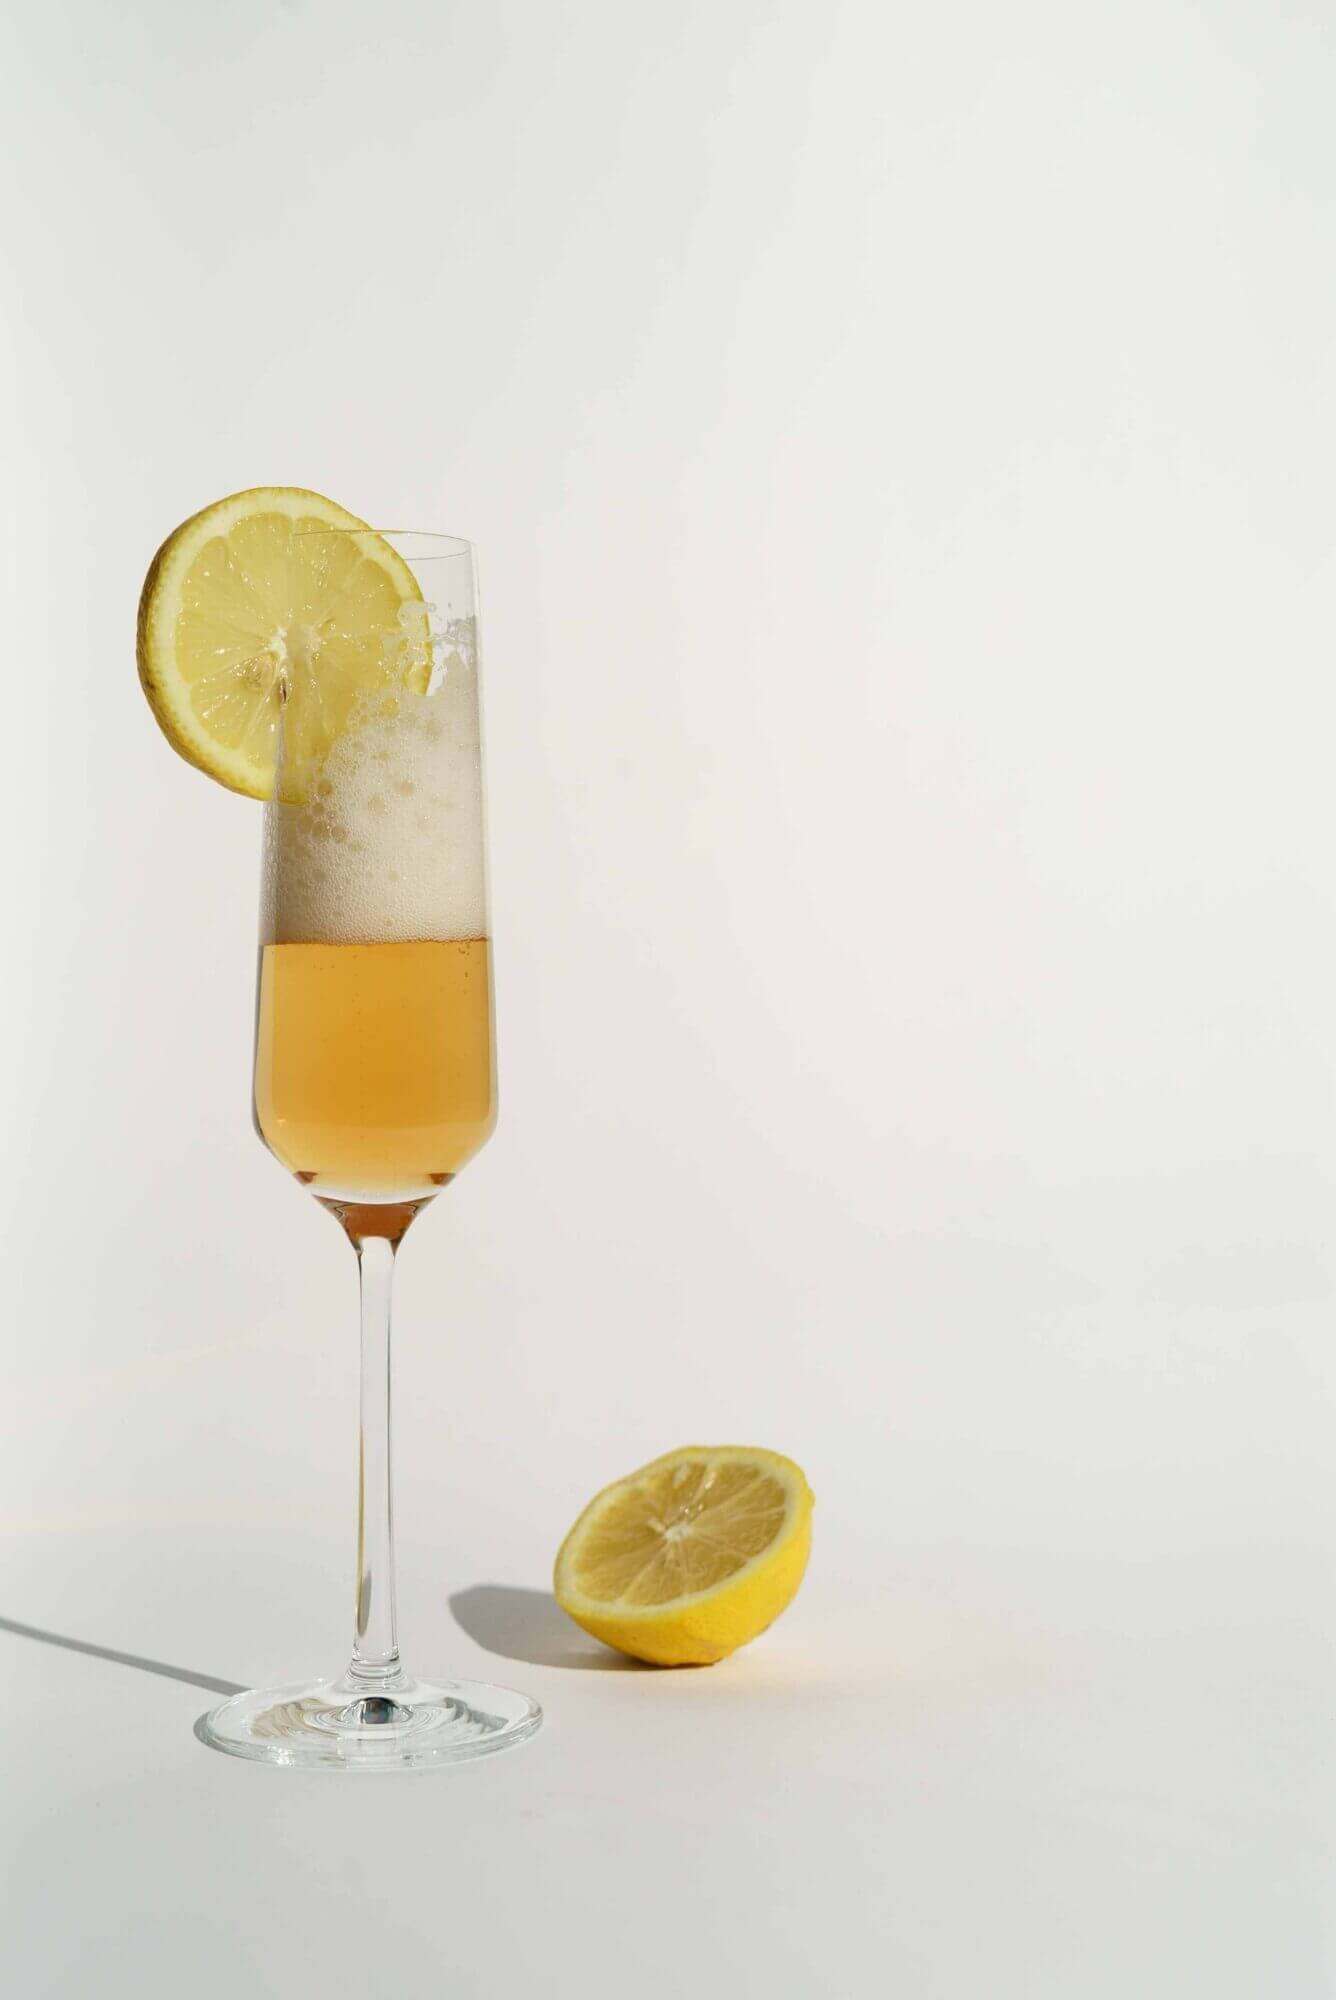 A glass of lemonade with a slice of lemon.